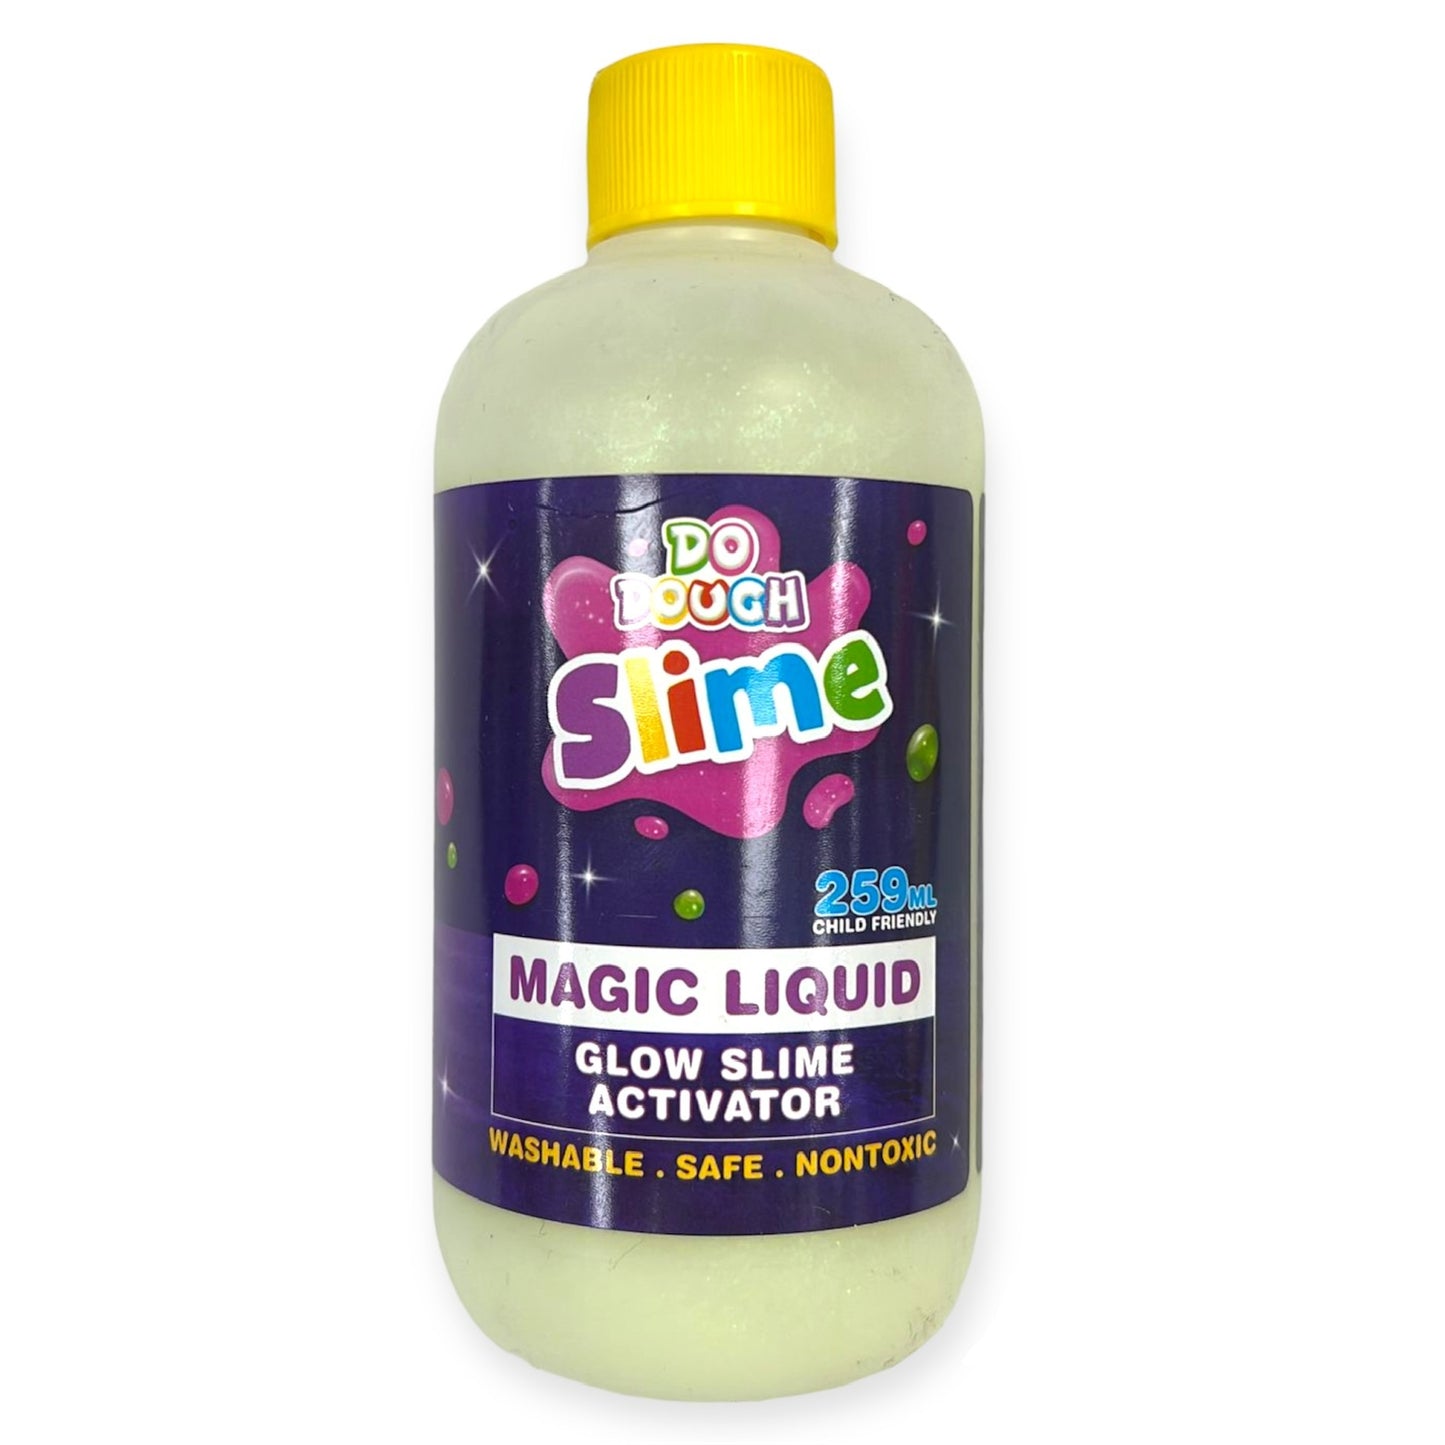 Do Dough Slime Magic Liquid Glow Slime Activator || مفعل السلايم مضيئ بالظلام دو دوه